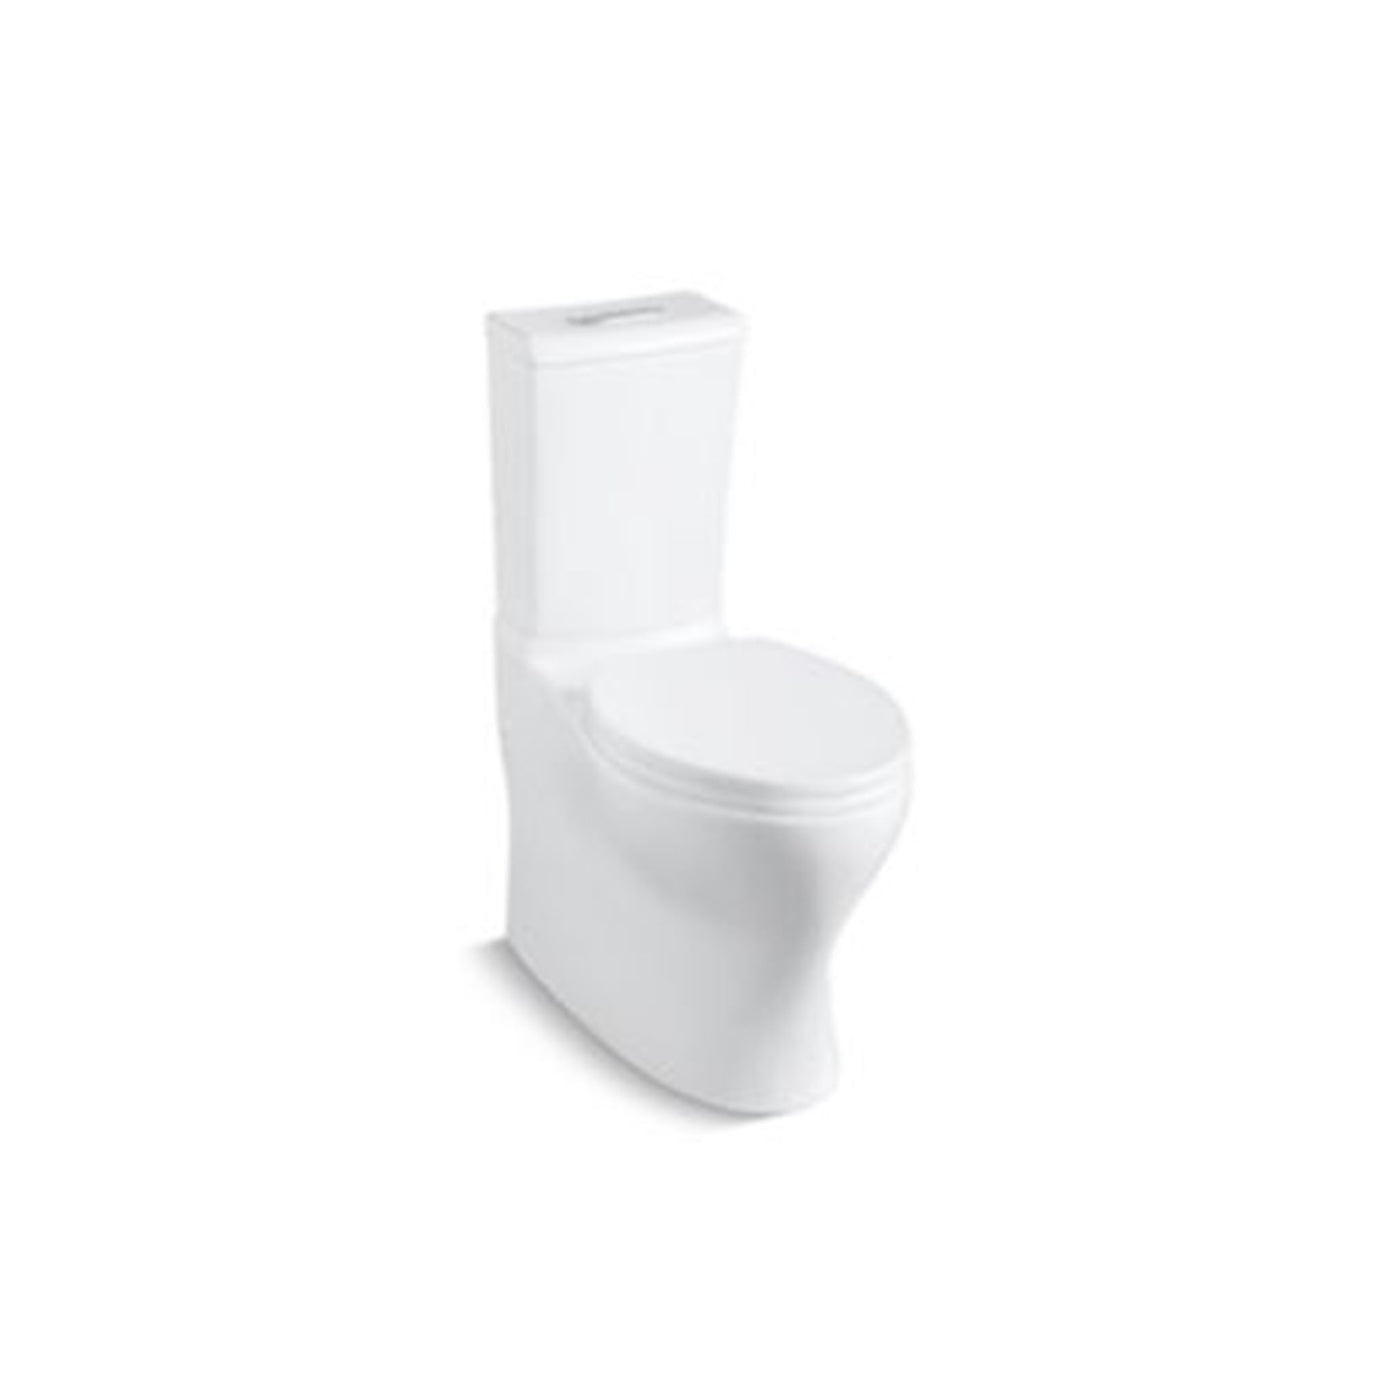 Plie® by Kallista Two-Piece High-Efficiency Toilet, Less Seat